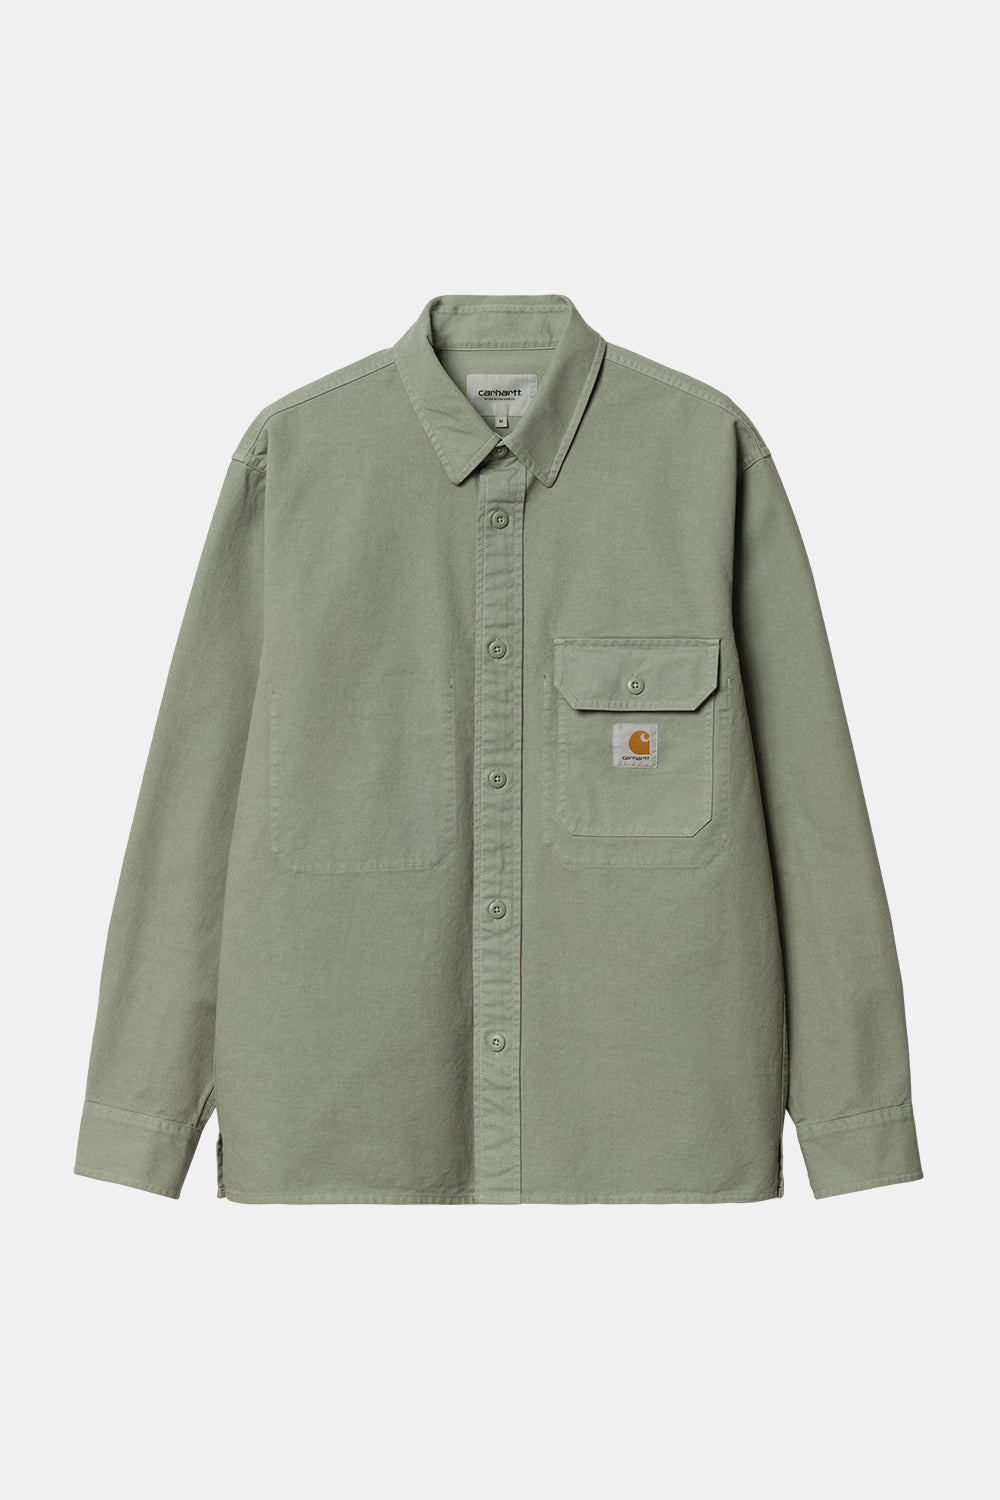 Carhartt WIP Reno Shirt Jacket (Yucca Green)